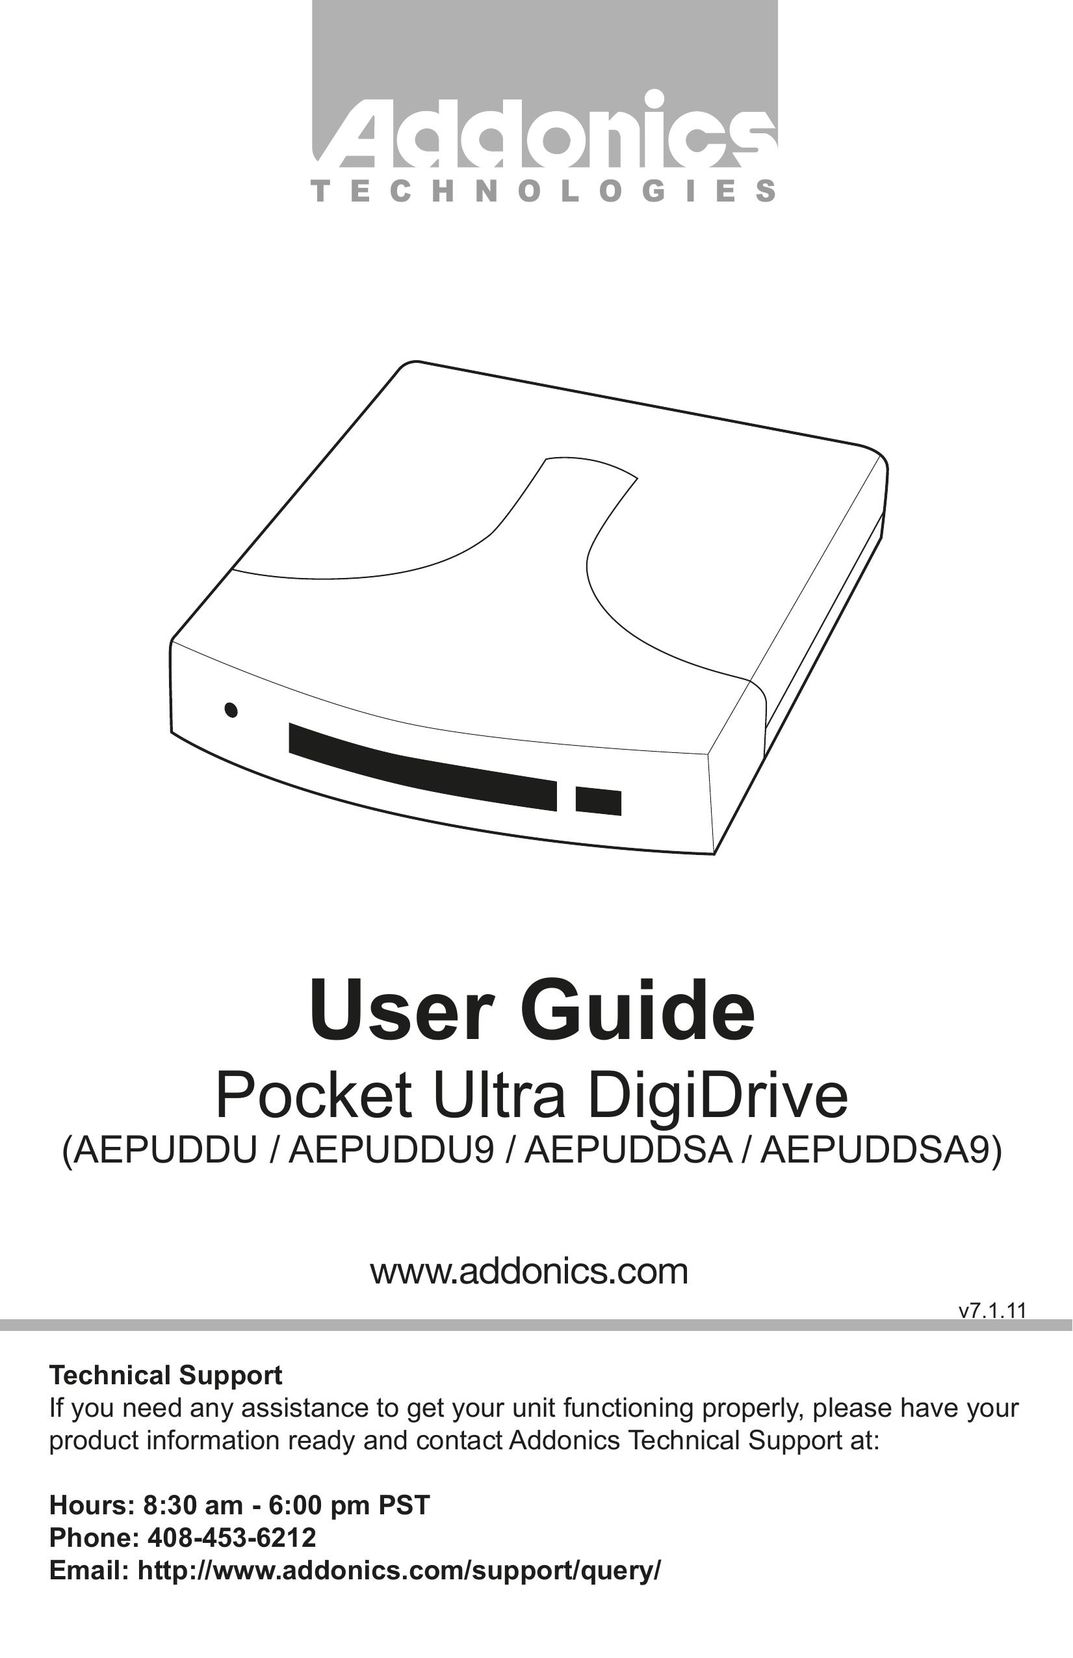 Addonics Technologies AEPUDDSA Computer Drive User Manual